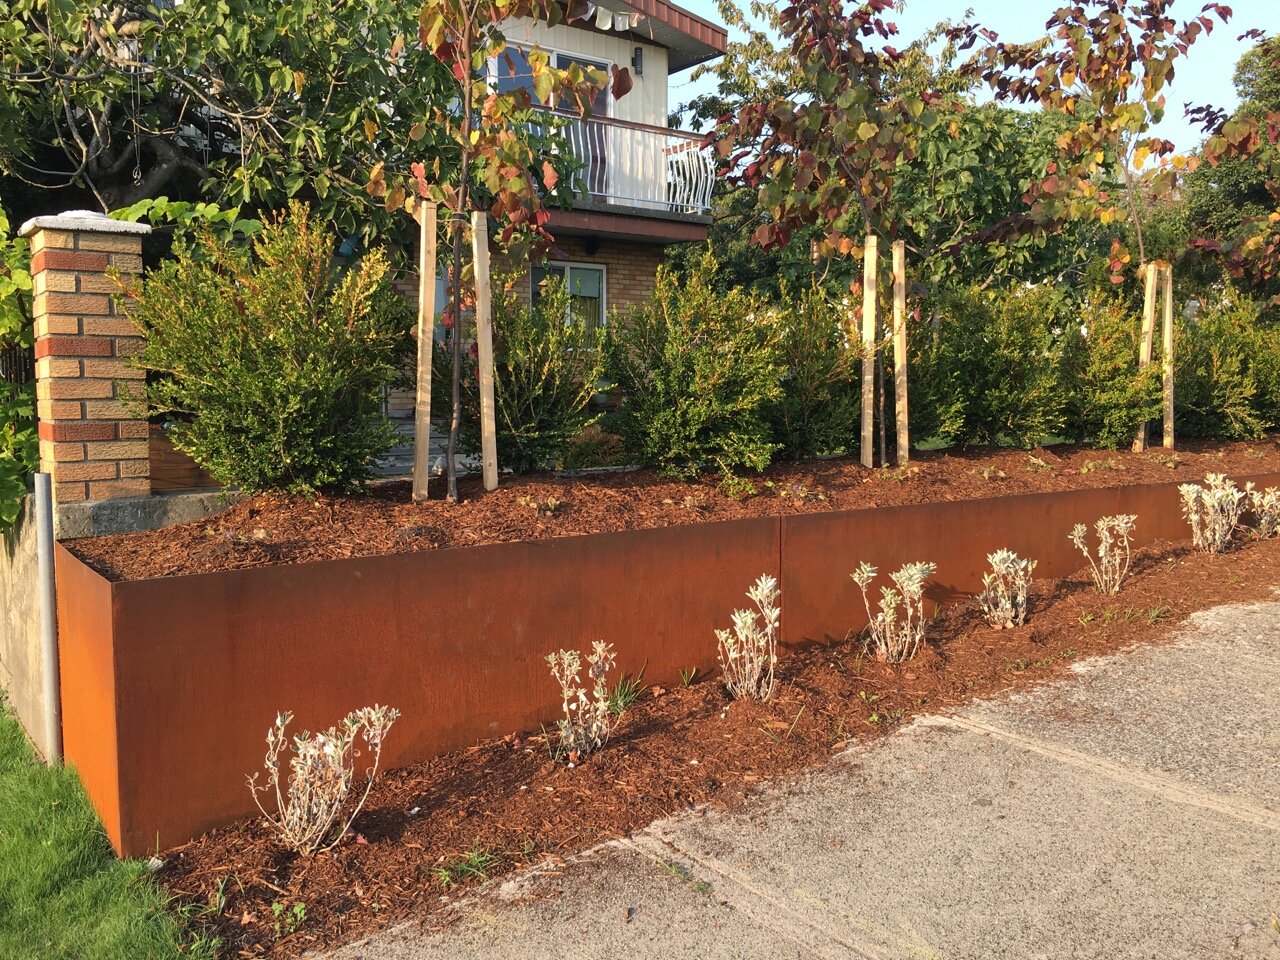 Rusty planter retaining wall